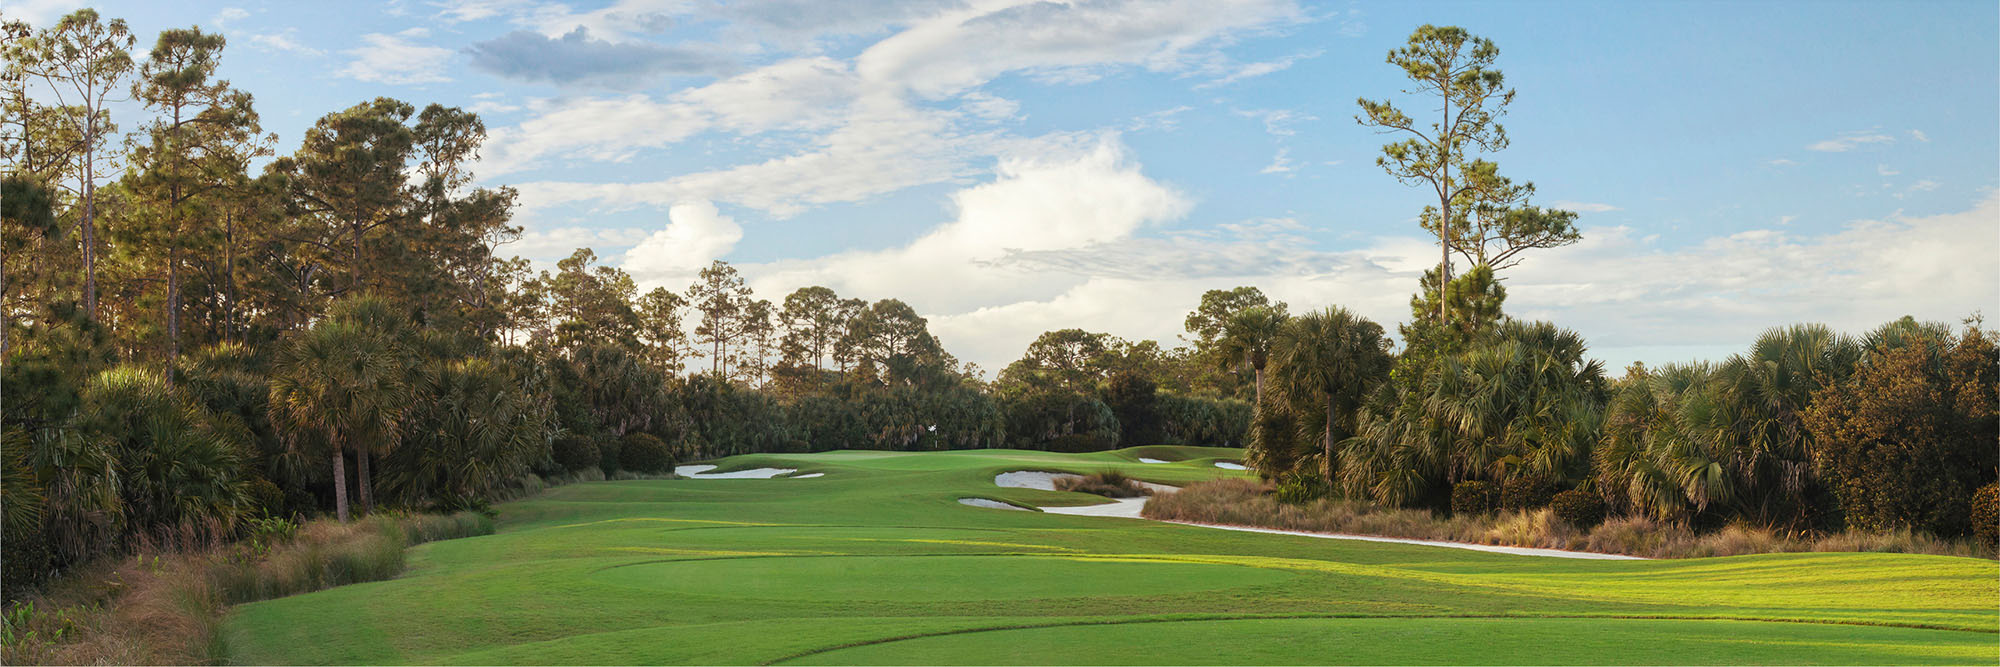 Golf Course Image - Mirasol Sunrise No. 11